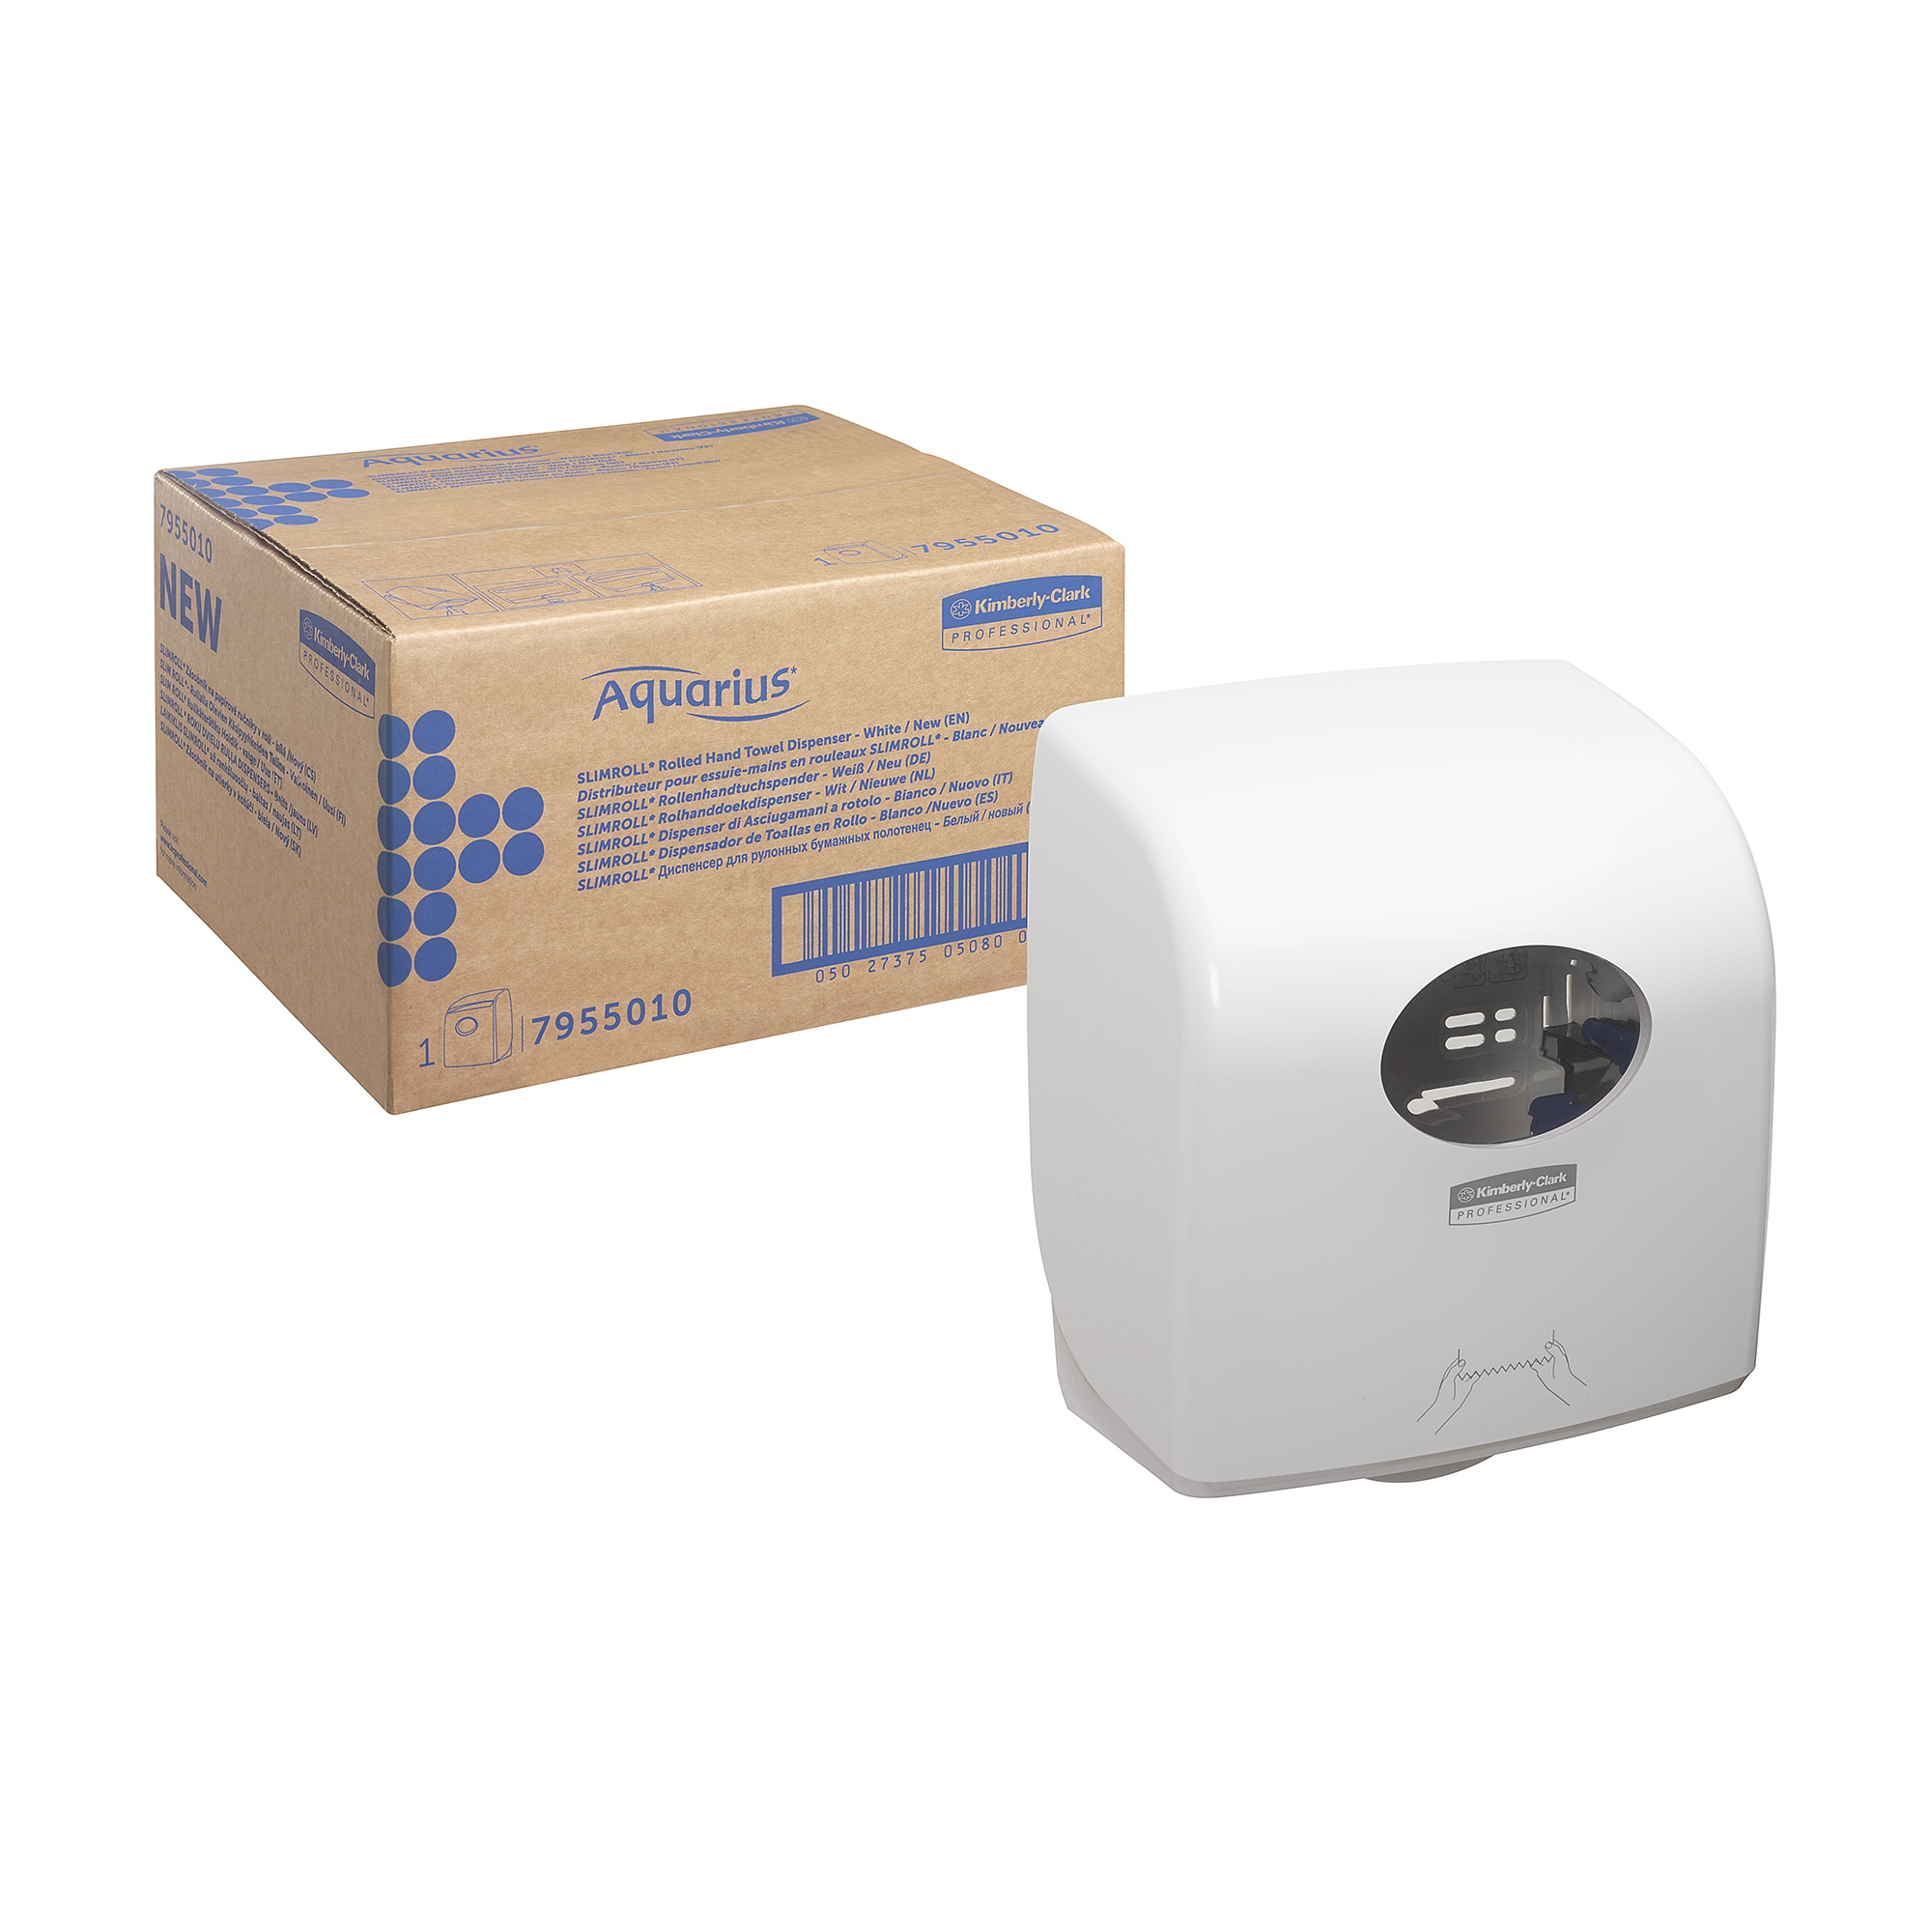 Aquarius™ Slimroll™ Papierhandtücher Rollenspender  – 1 x Papiertuchspender, weiß